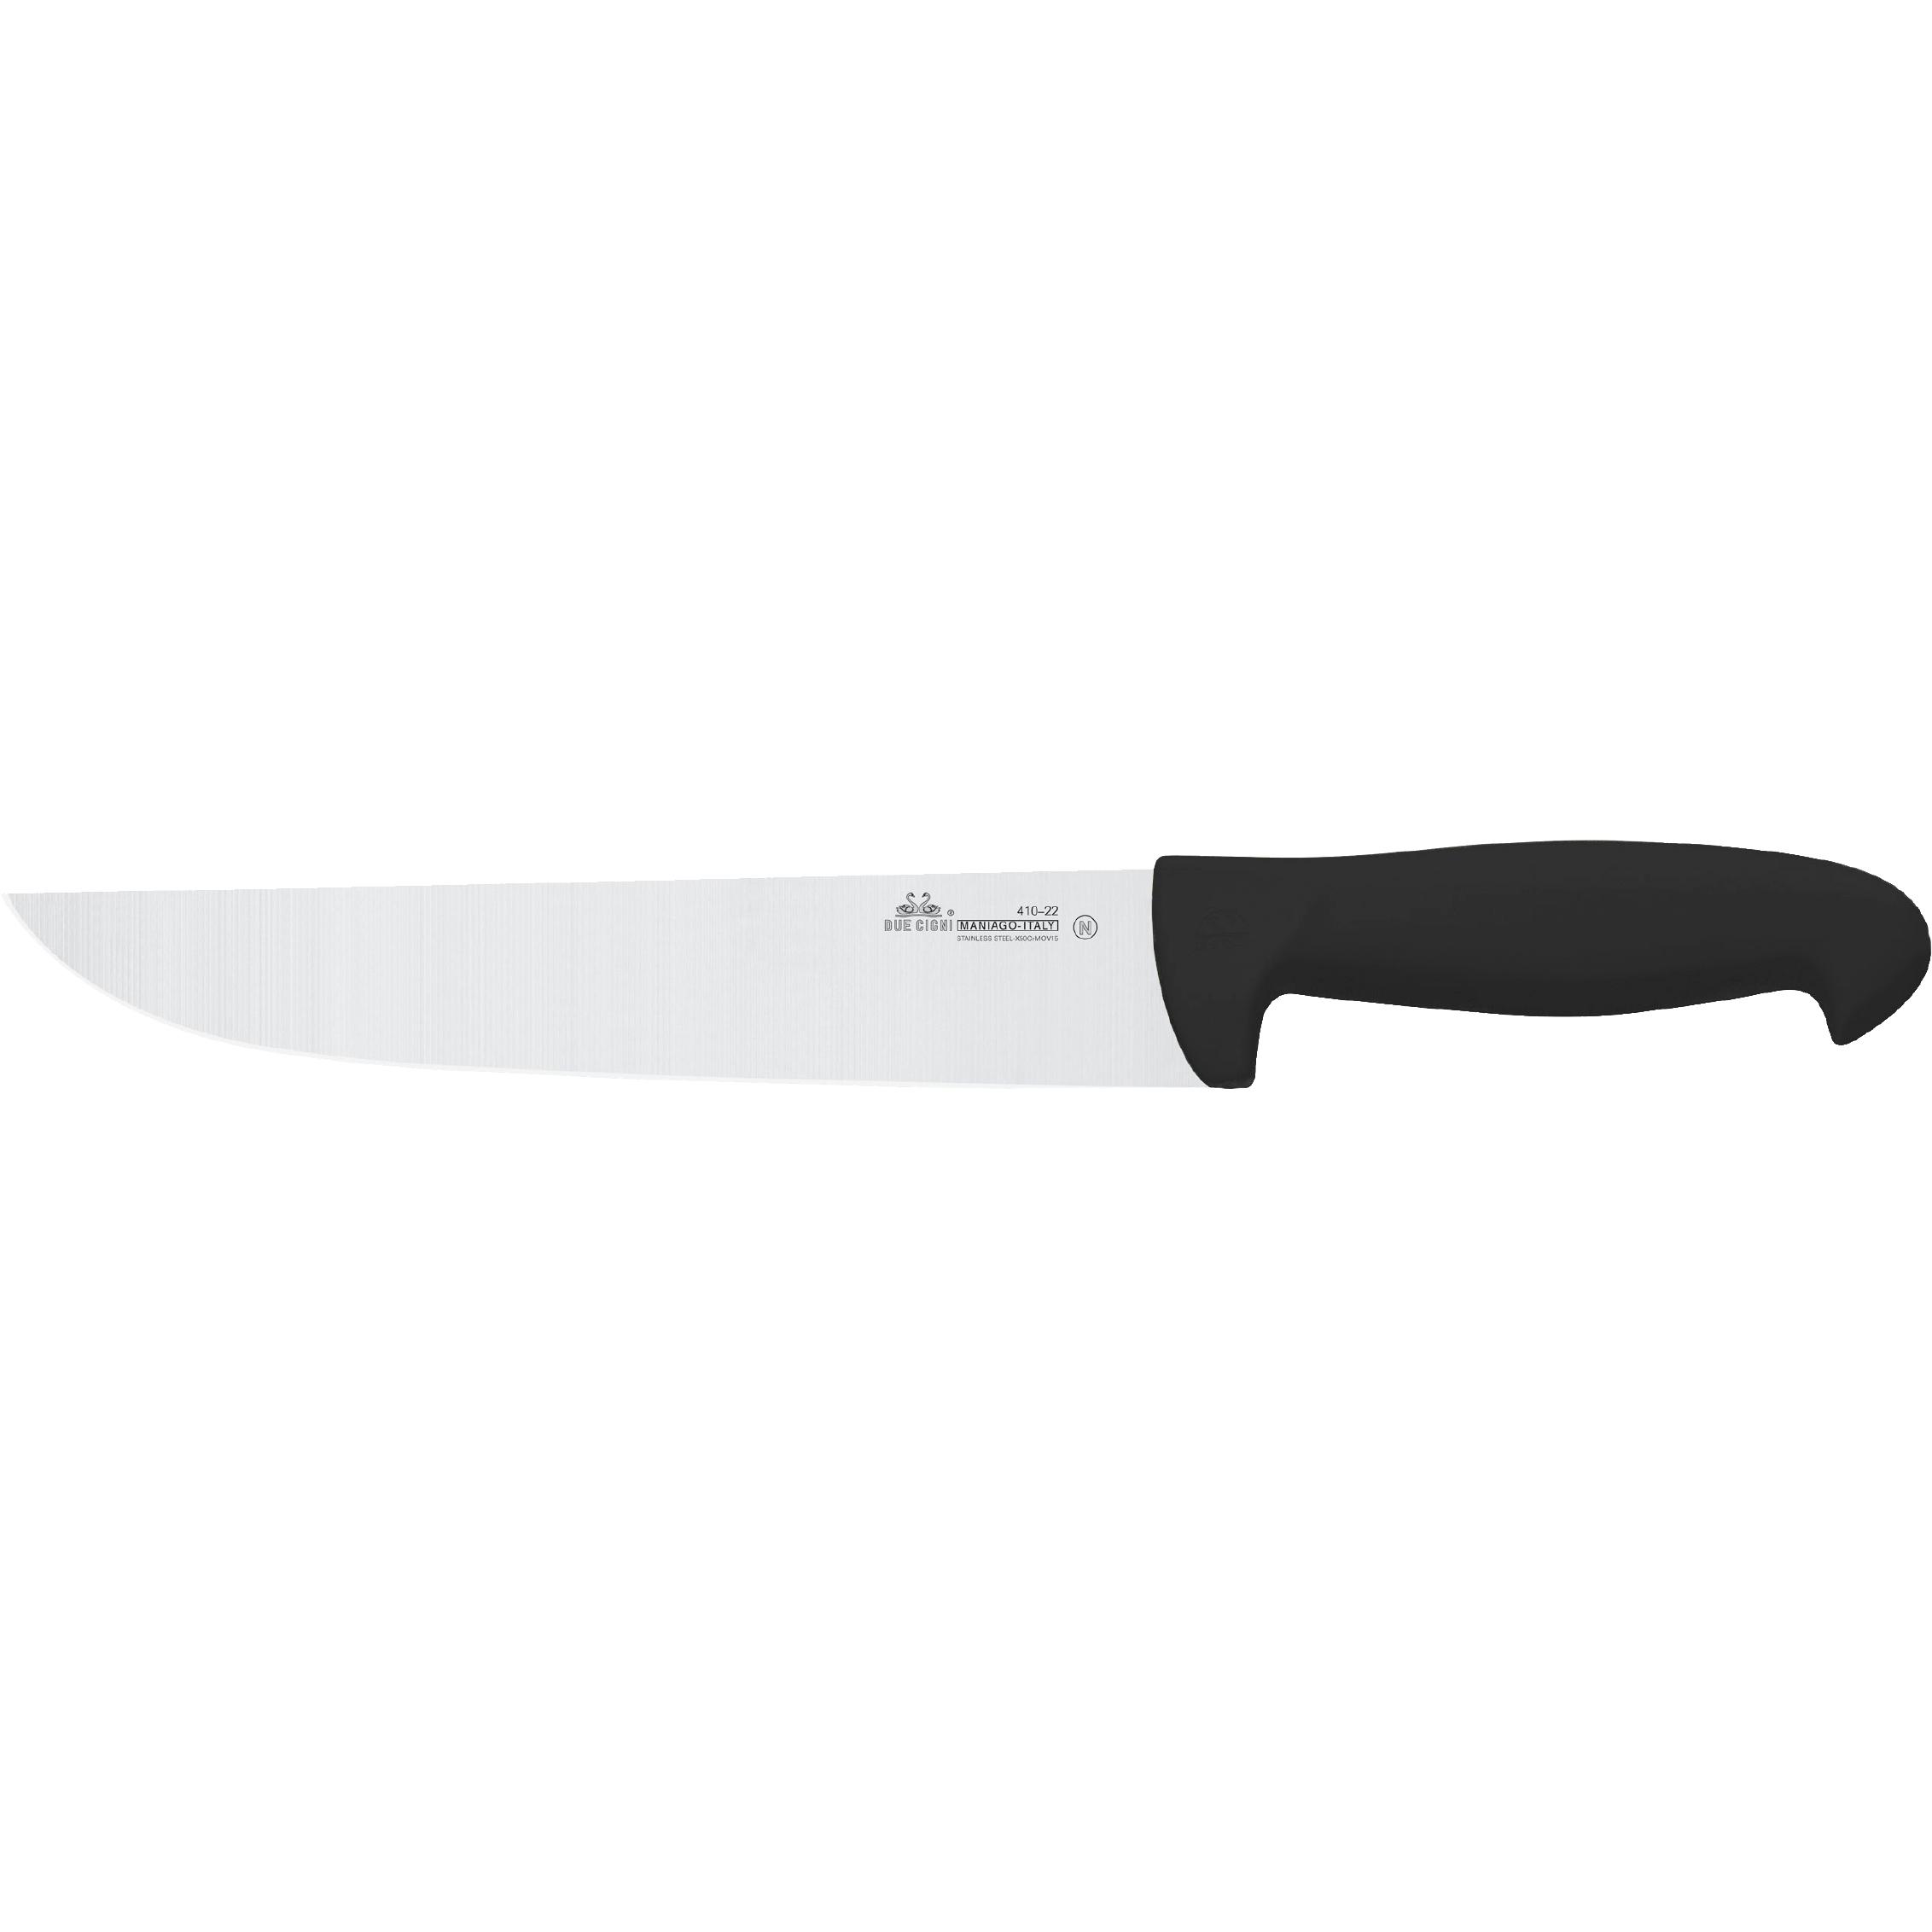 Нож кухонный Due Cigni Professional Butcher Knife 200 мм. Цвет - черный 2C 410/22 N 1904.01.02